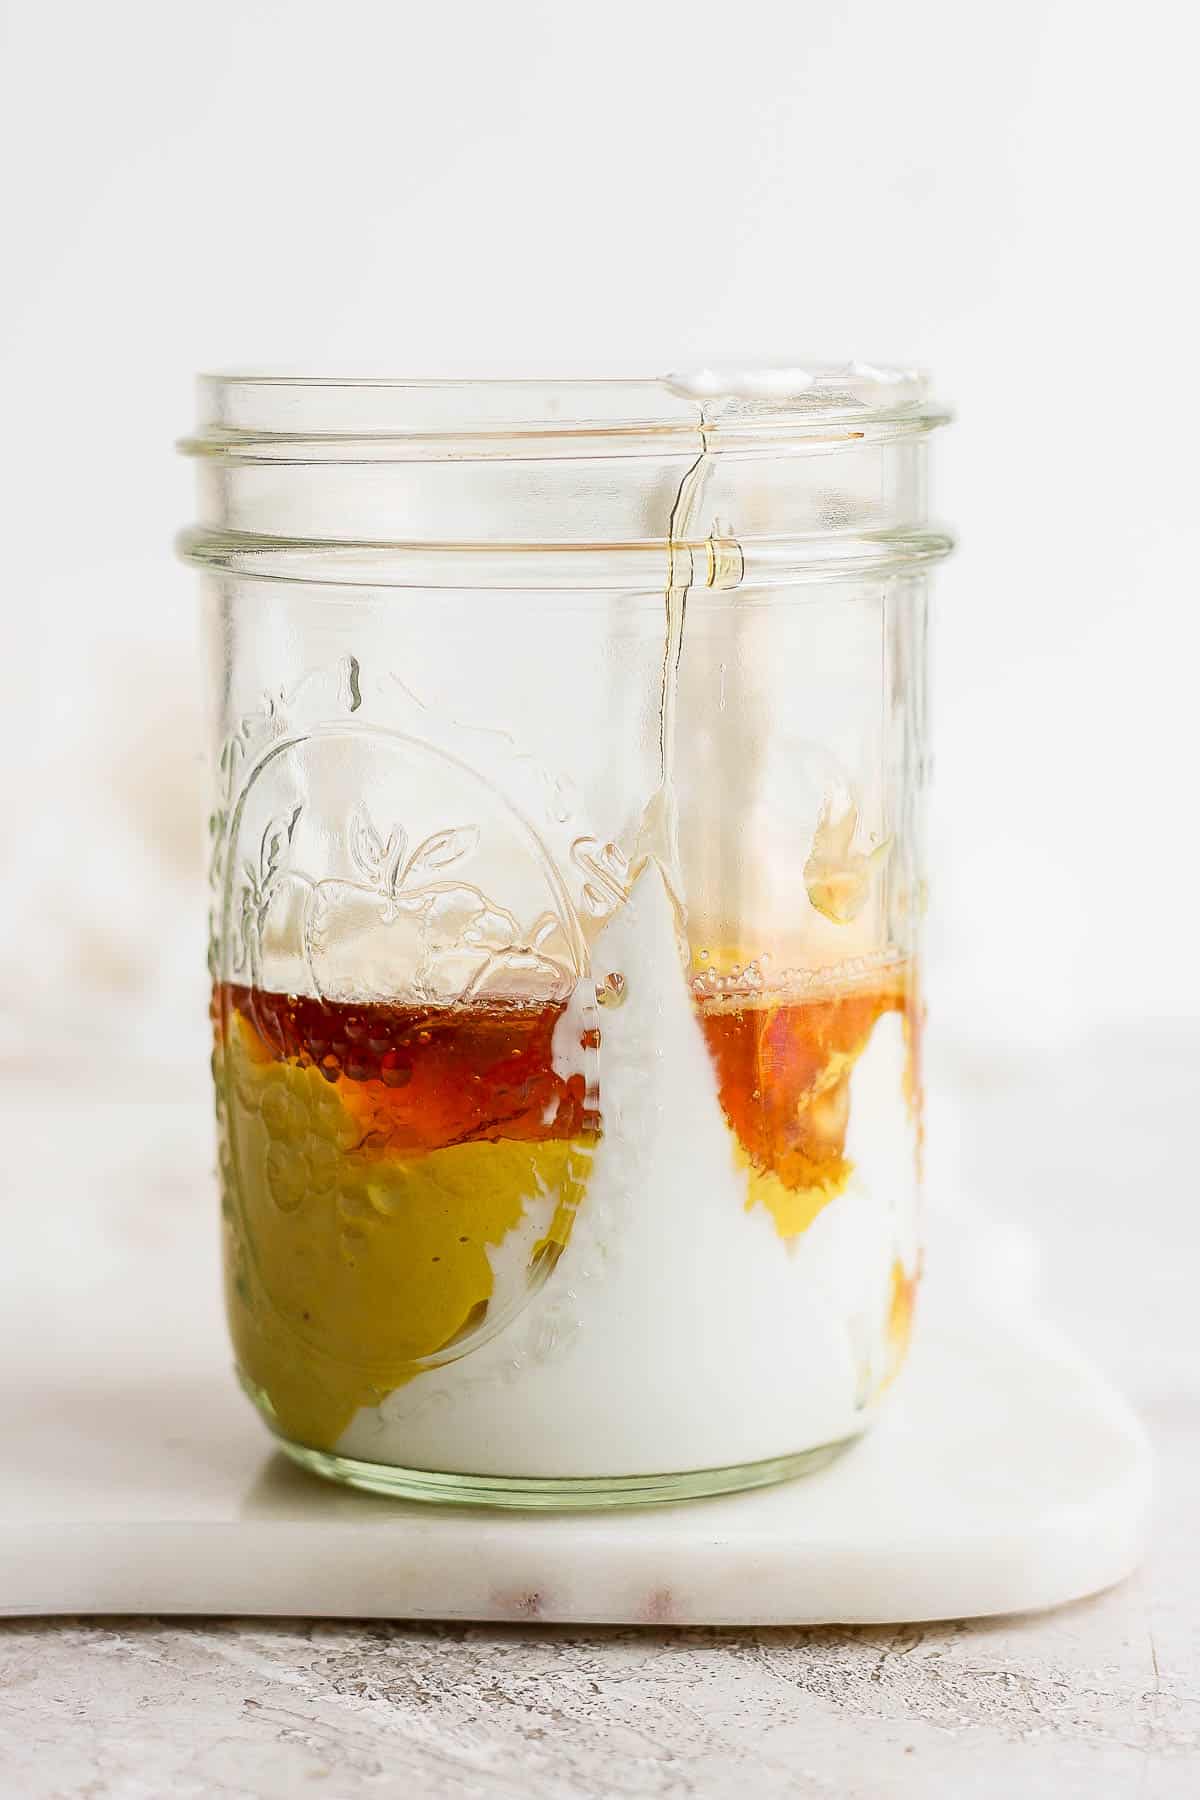 Honey mustard dressing ingredients in a mason jar.